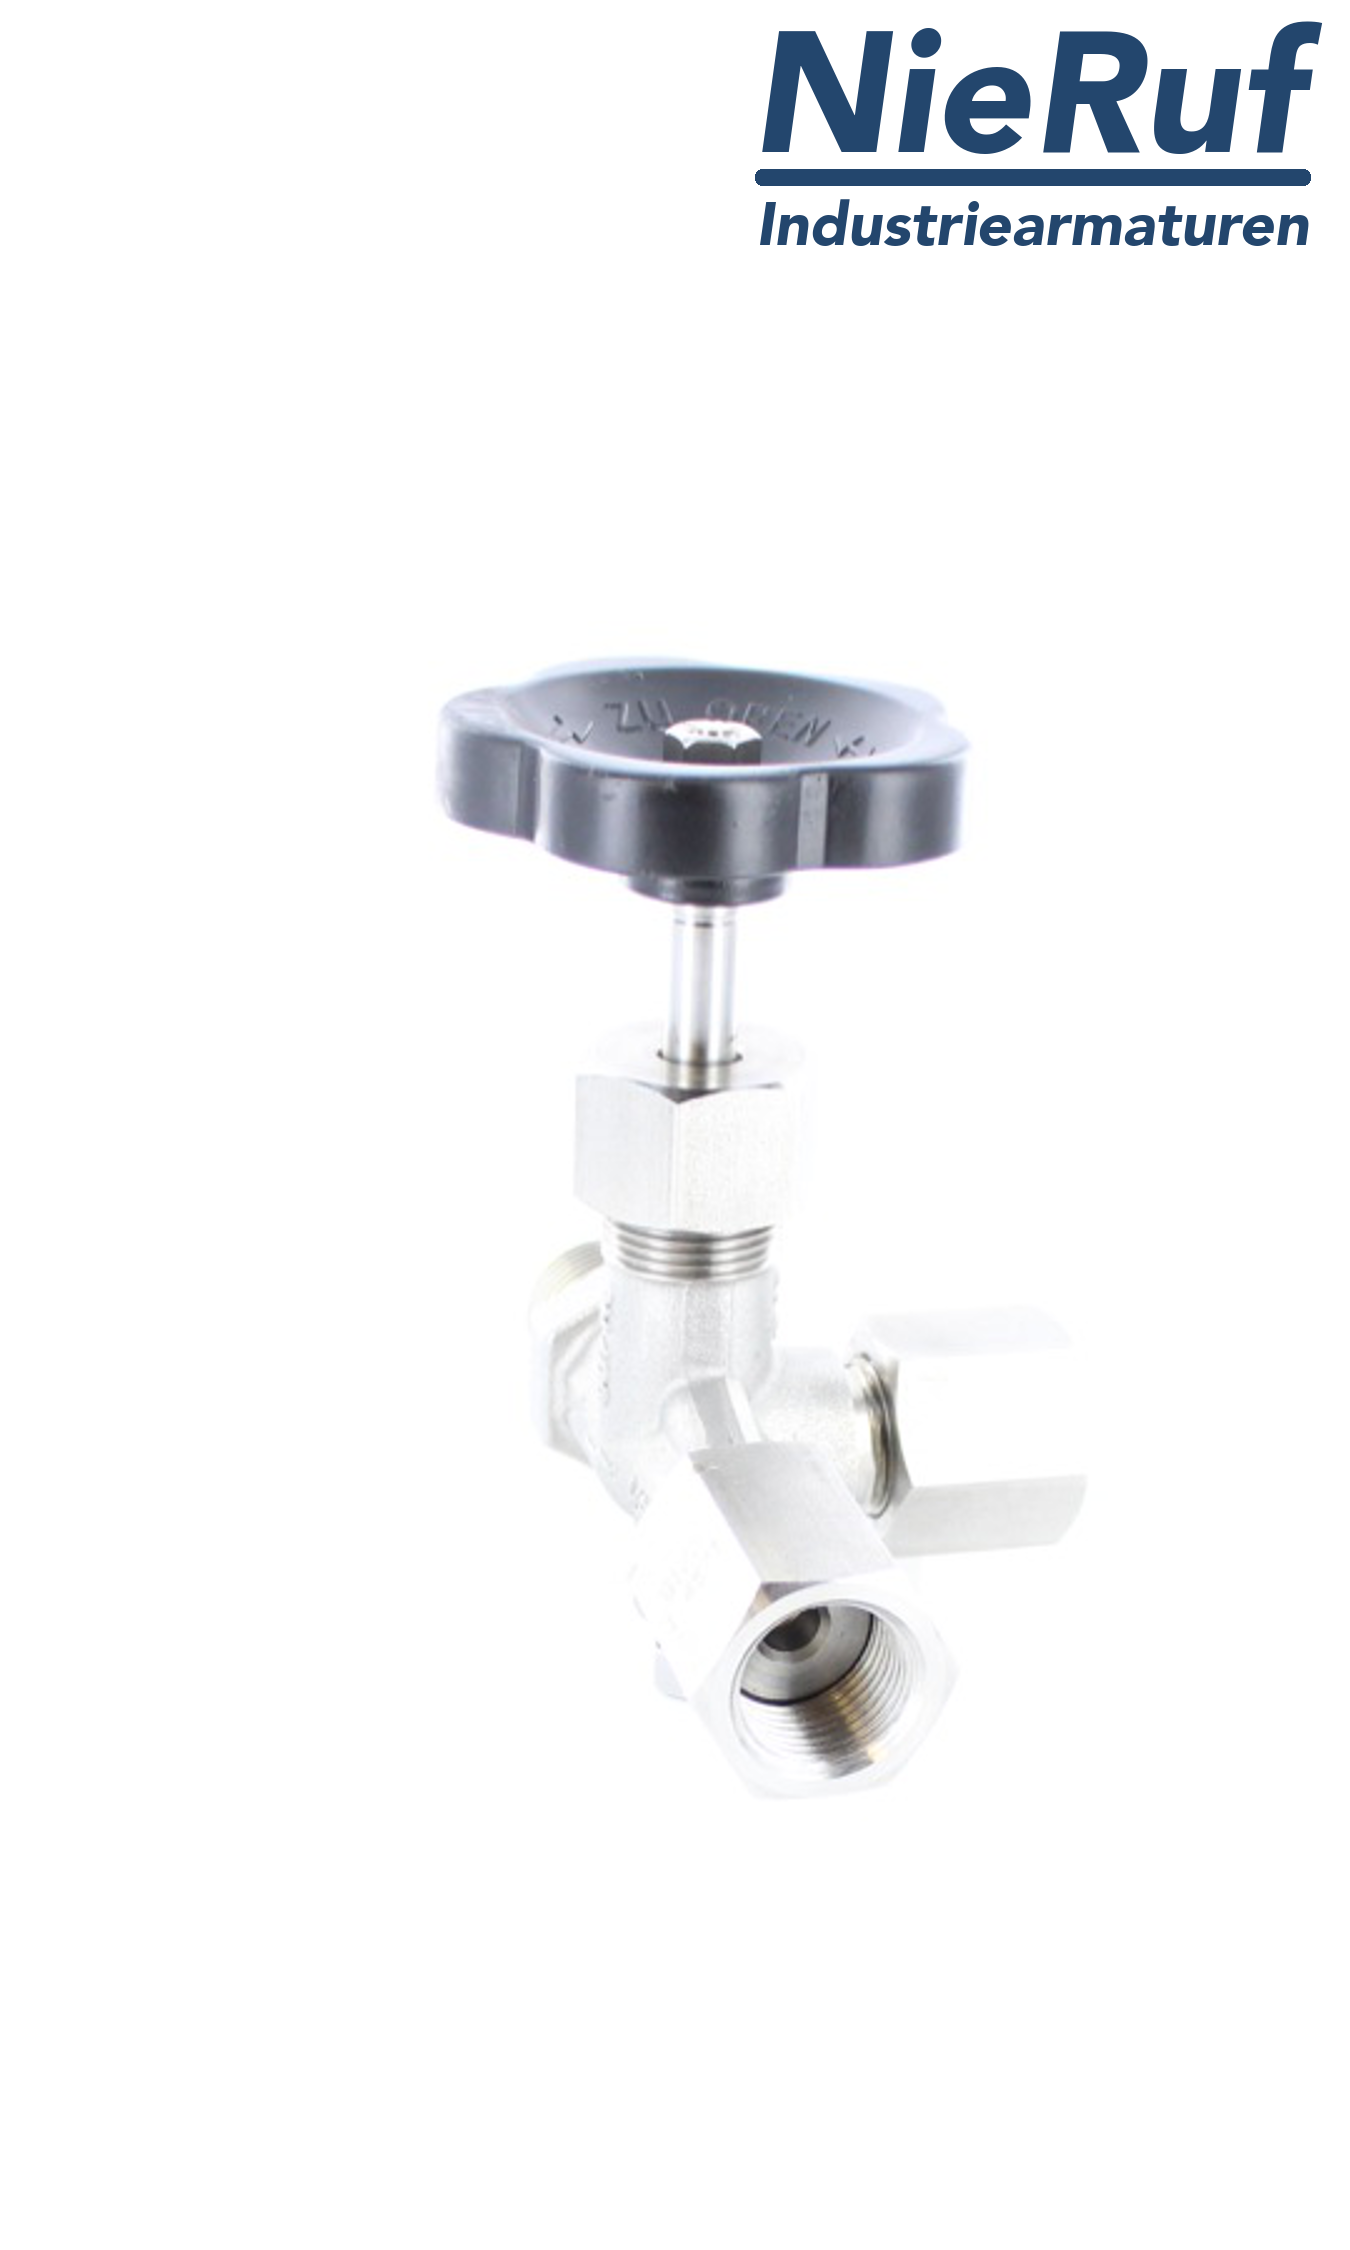 manometer gauge valves sleeve x sleeve x test connector M20x1,5 DIN 16271 stainless steel 1.4571 400 bar